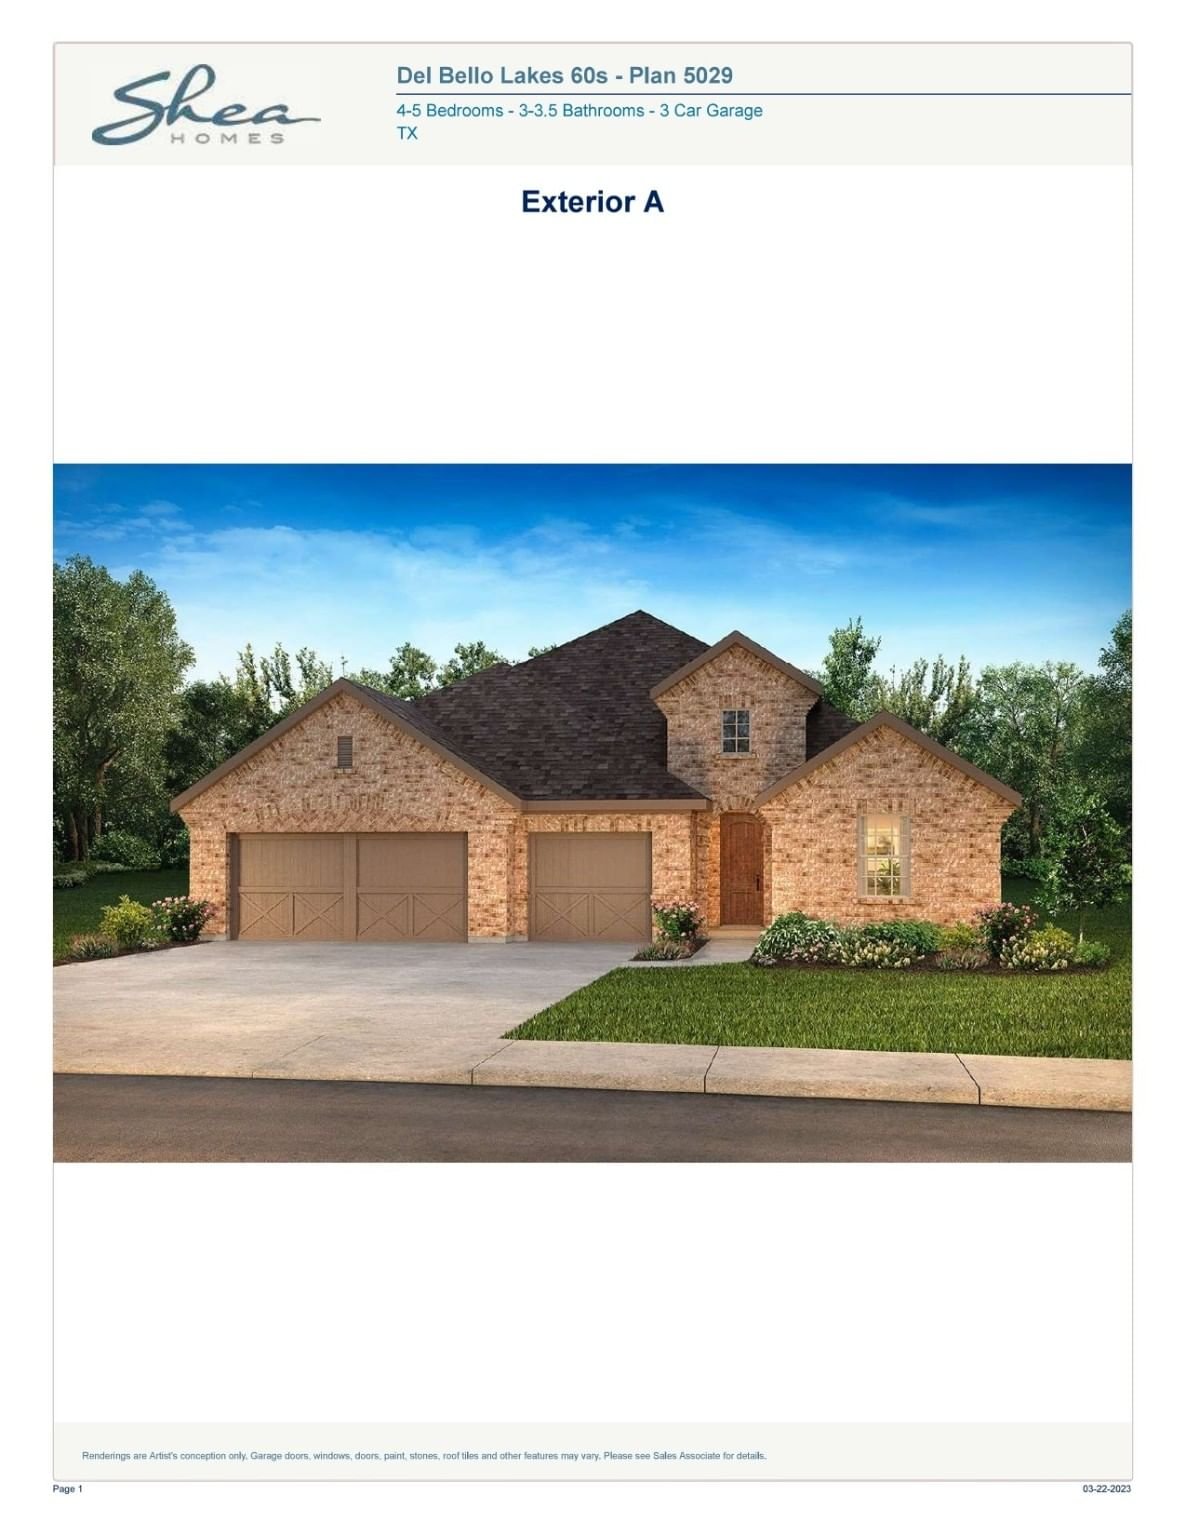 Real estate property located at 4331 Golden Ridge, Brazoria, Del Bello Lakes, Manvel, TX, US